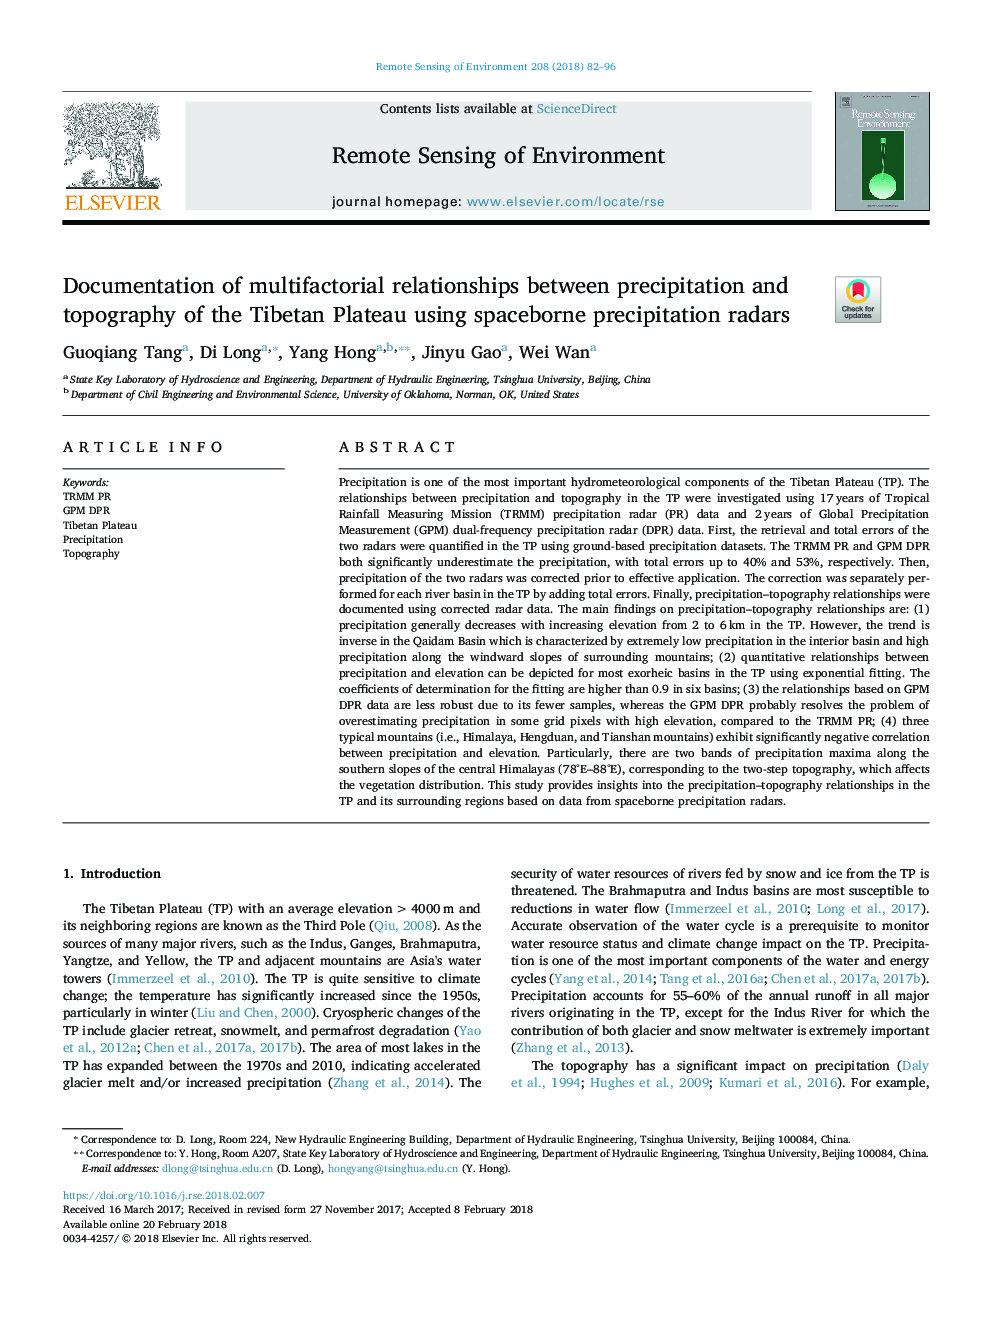 Documentation of multifactorial relationships between precipitation and topography of the Tibetan Plateau using spaceborne precipitation radars